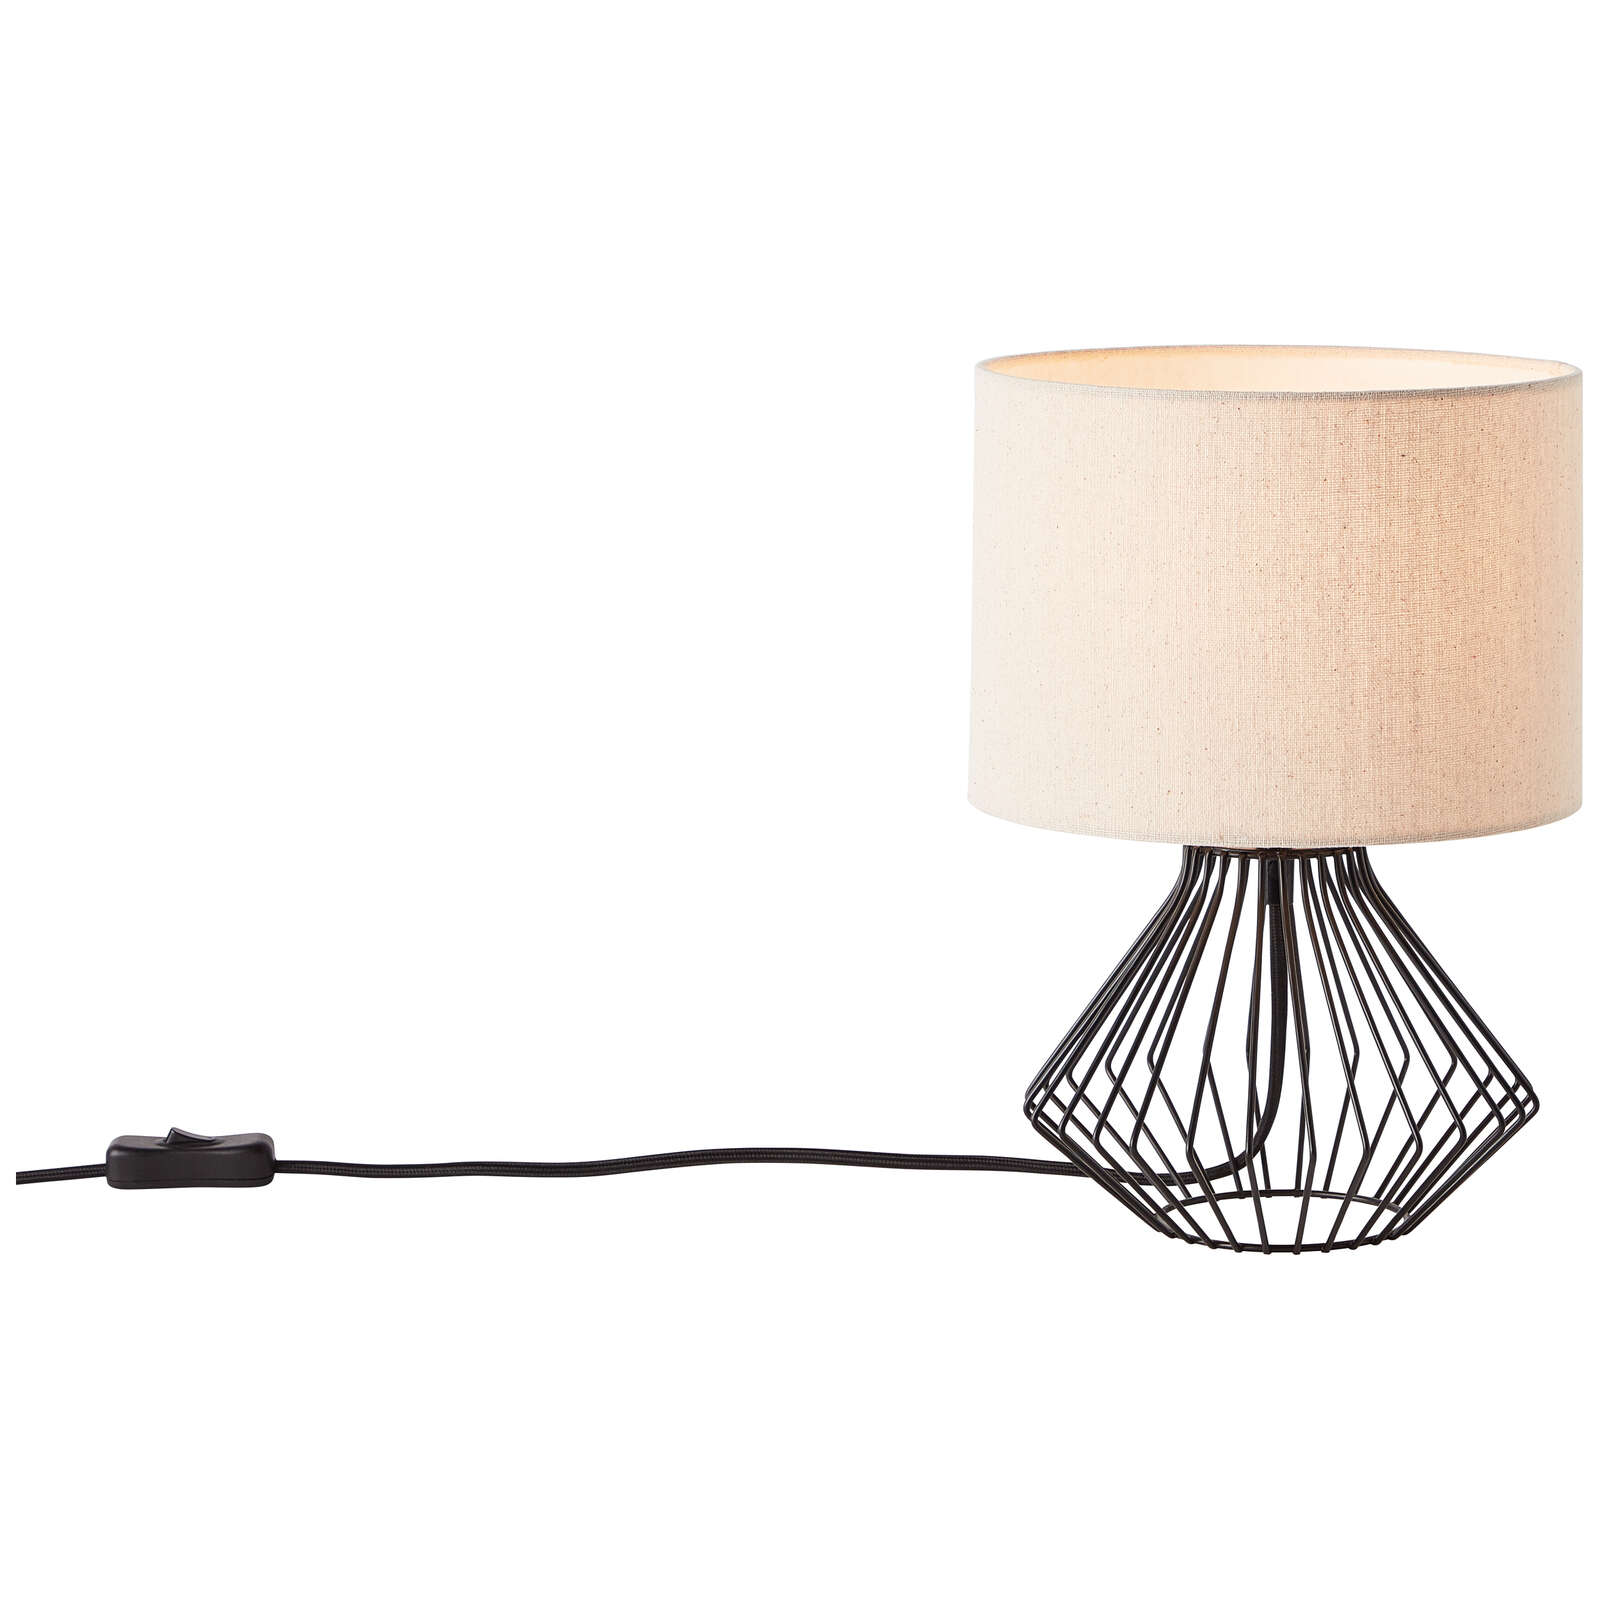             Textile table lamp - Liana - Brown
        